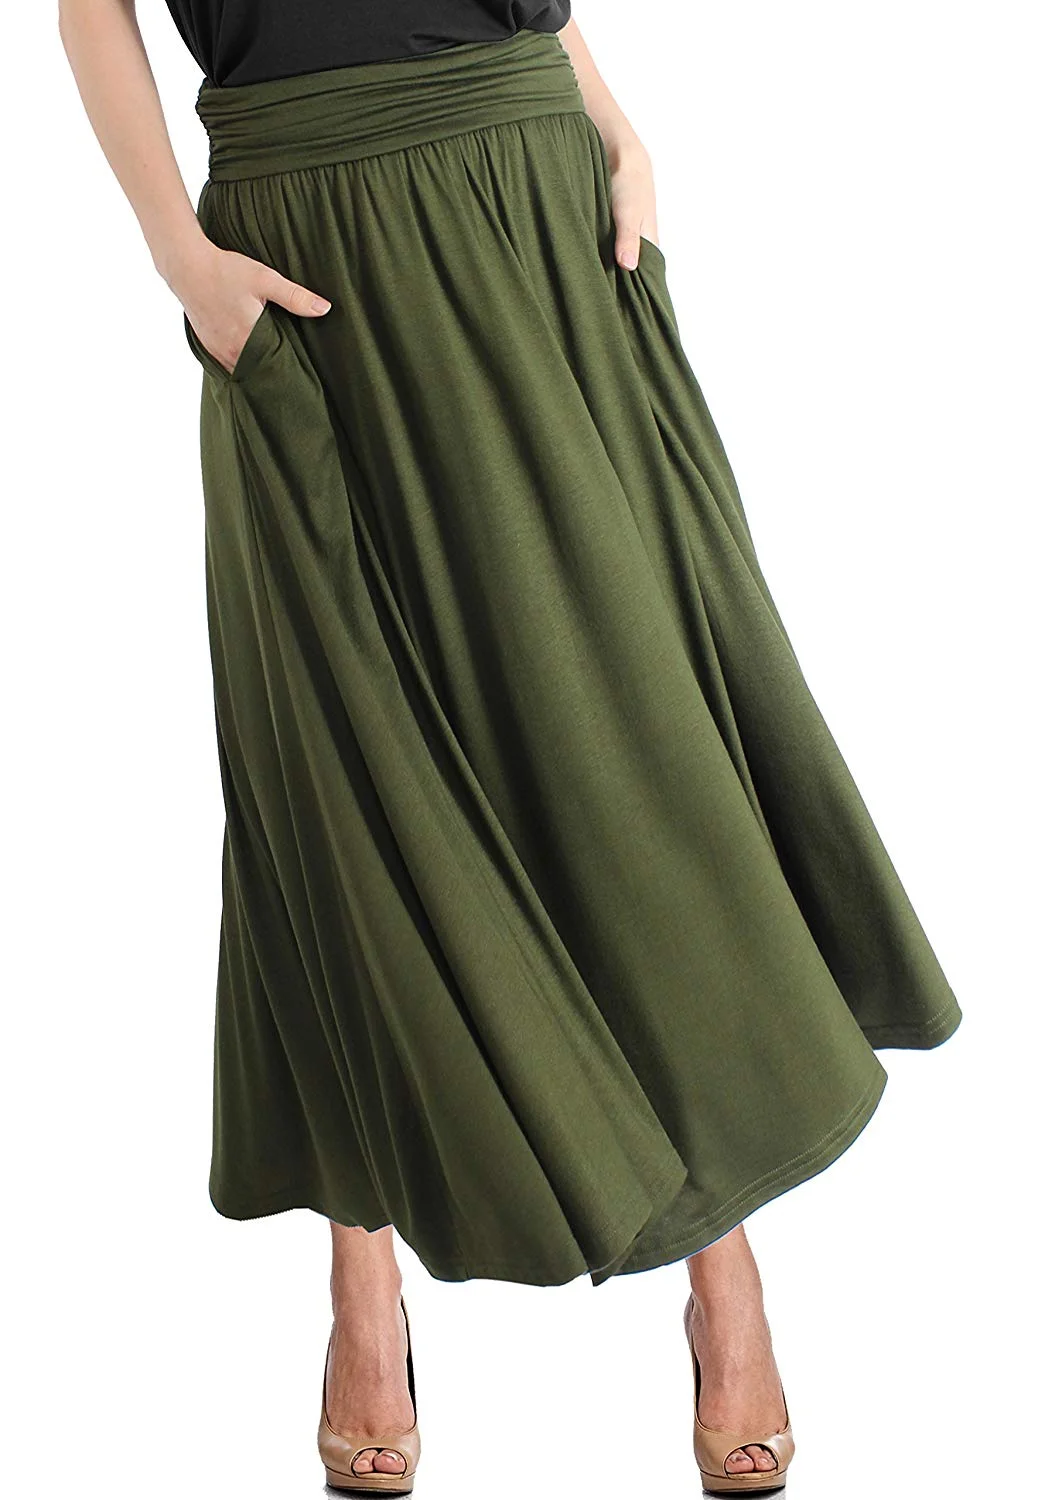 Women's High Waist Fold Over Pocket Shirring Skirt